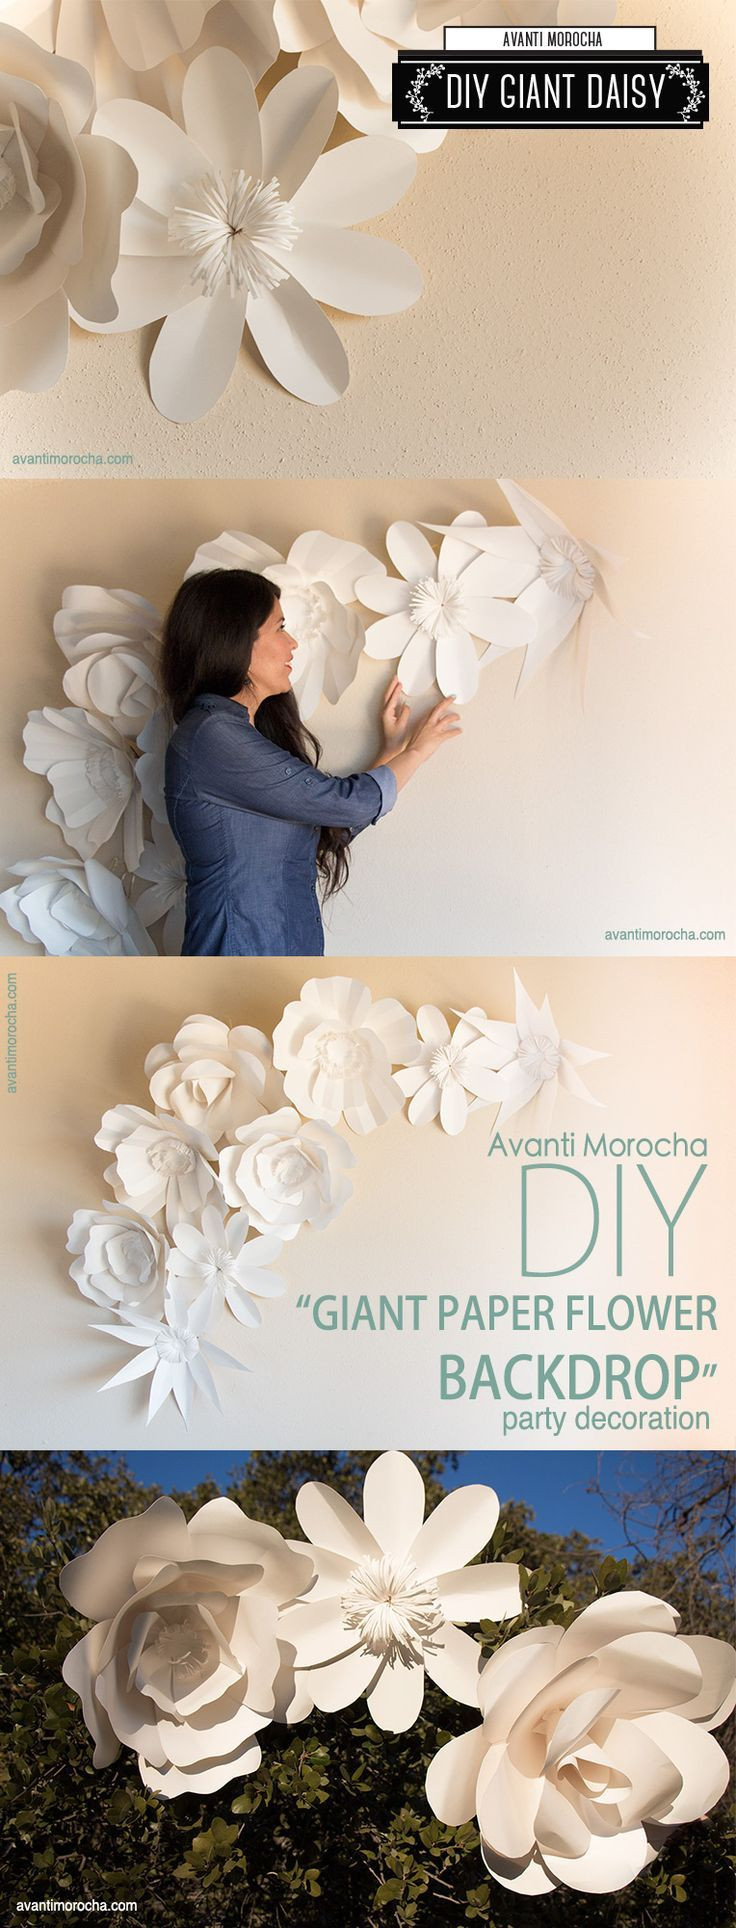 DIY Wedding Videography
 DIY " Giant Paper Flower Backdrop" Weddings event decor